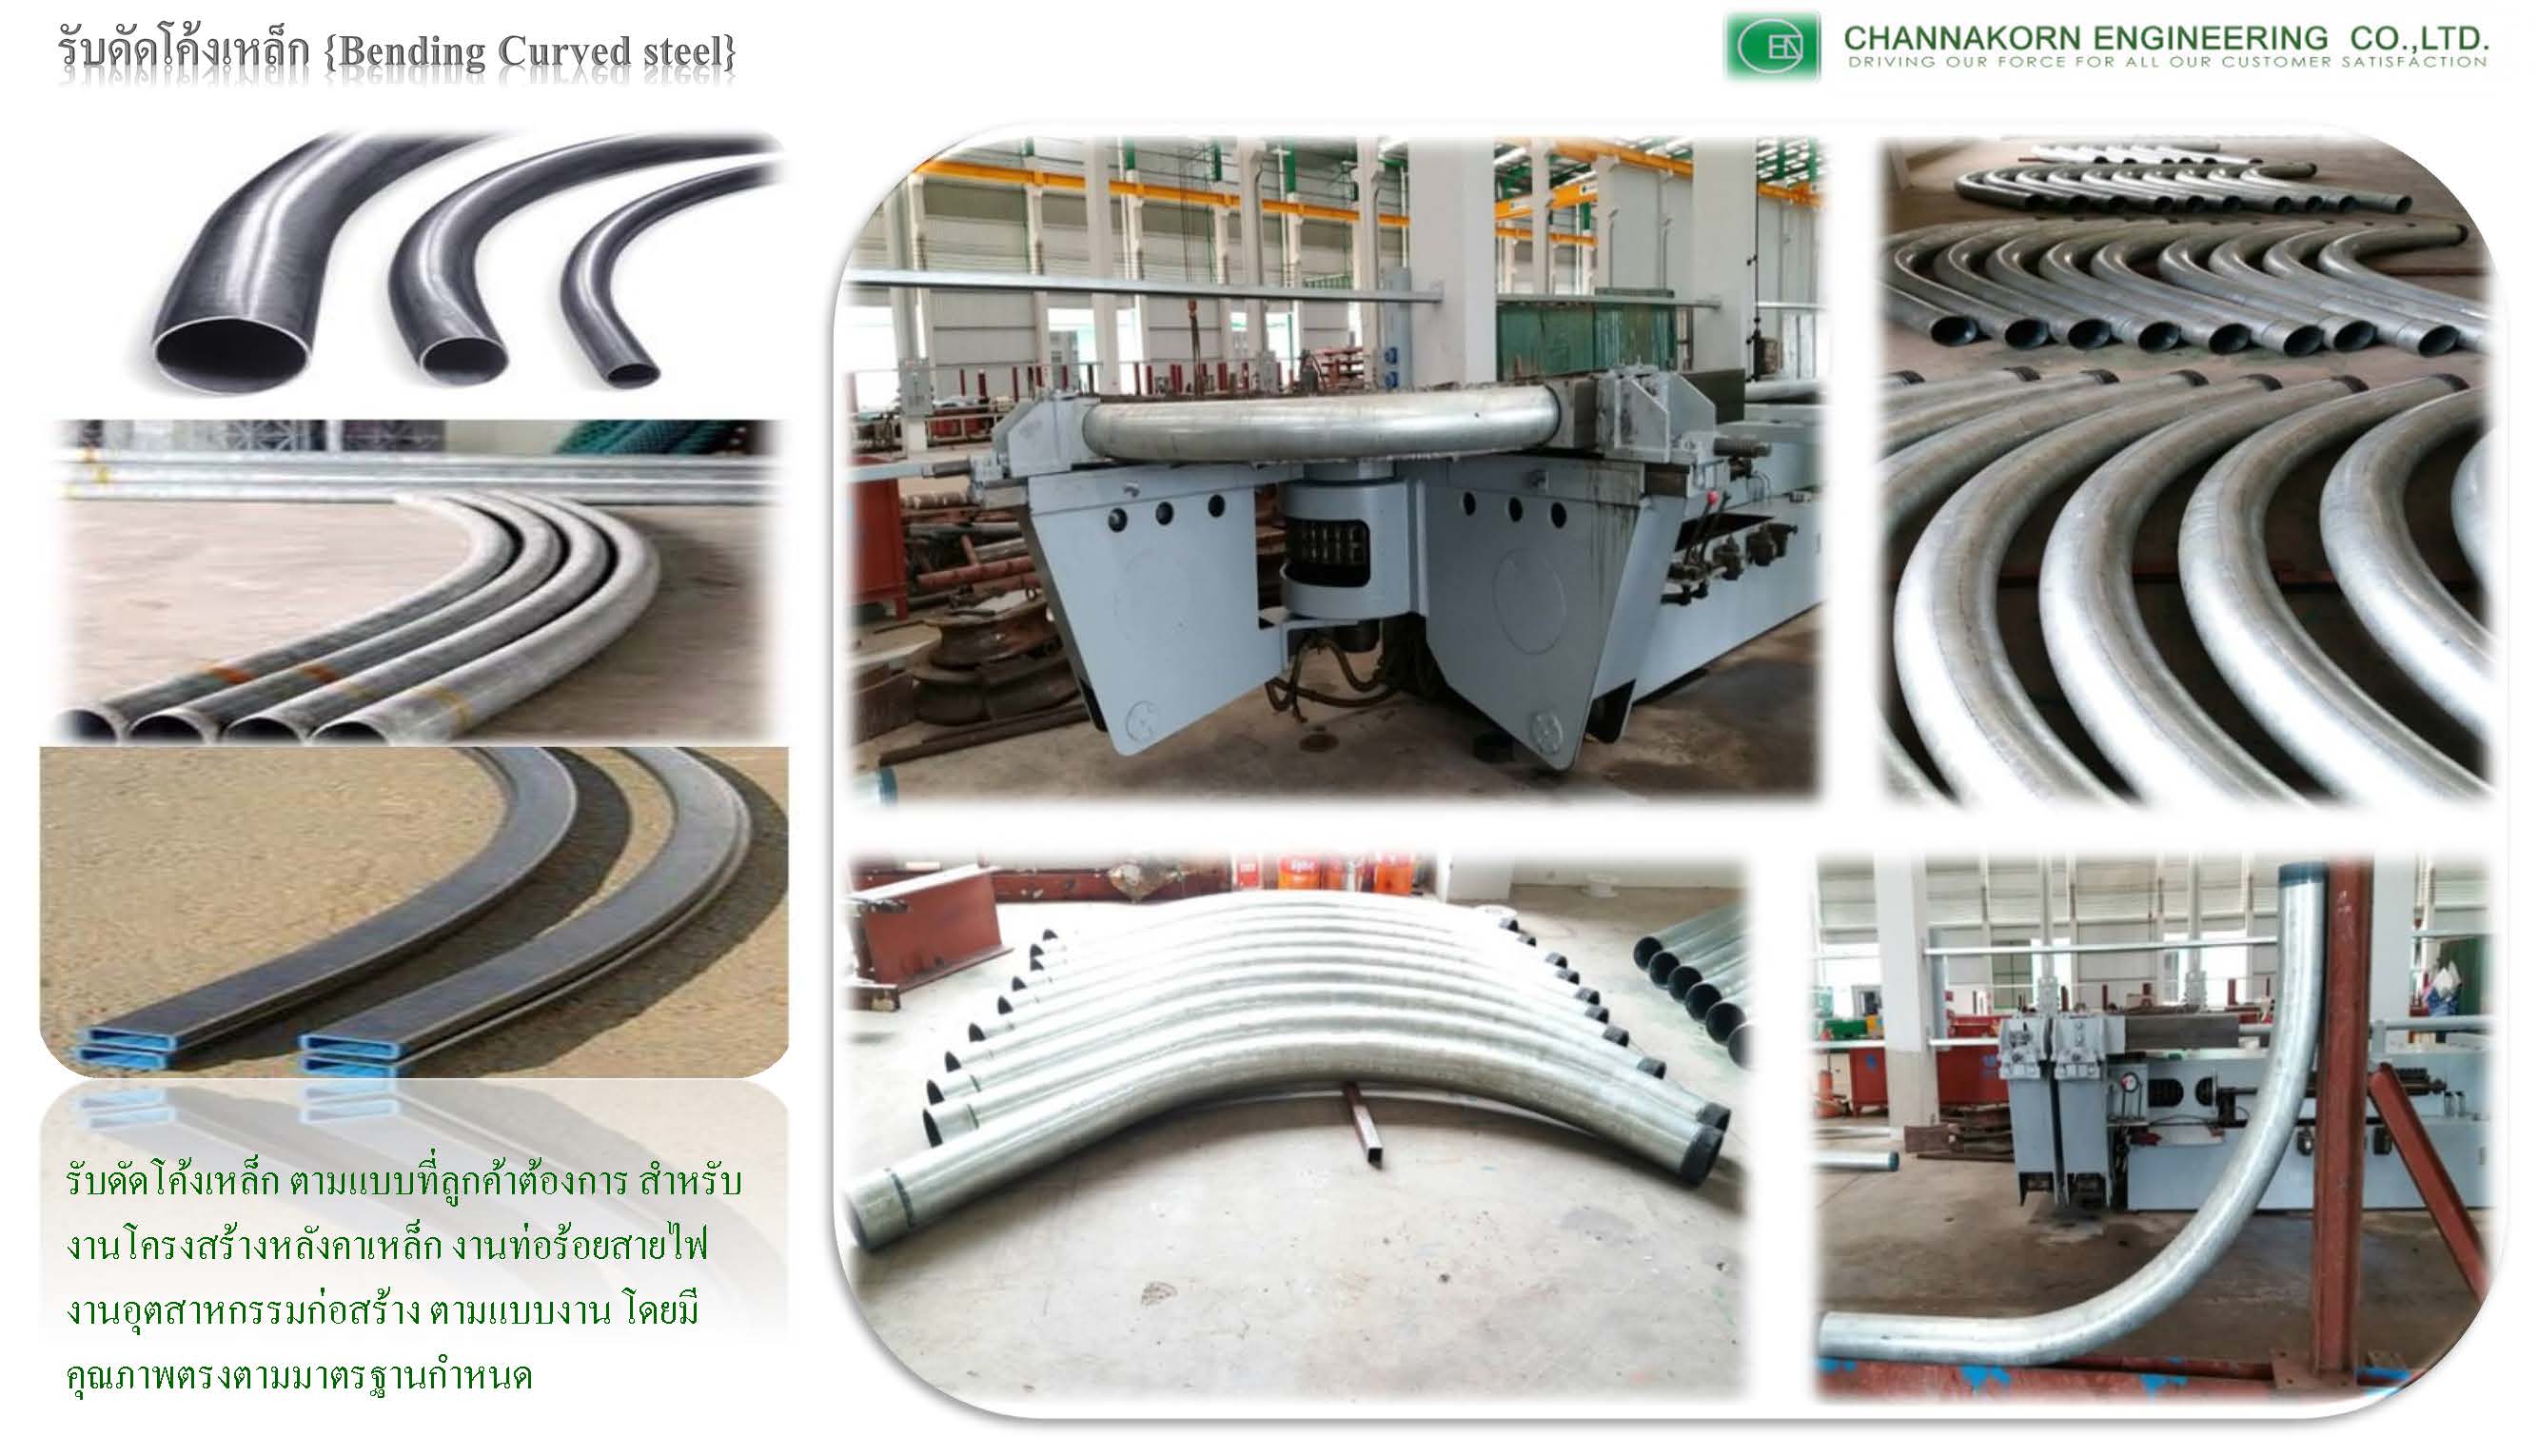 Sell Bending Curved steel - Channakorn Engineering Co.,Ltd.